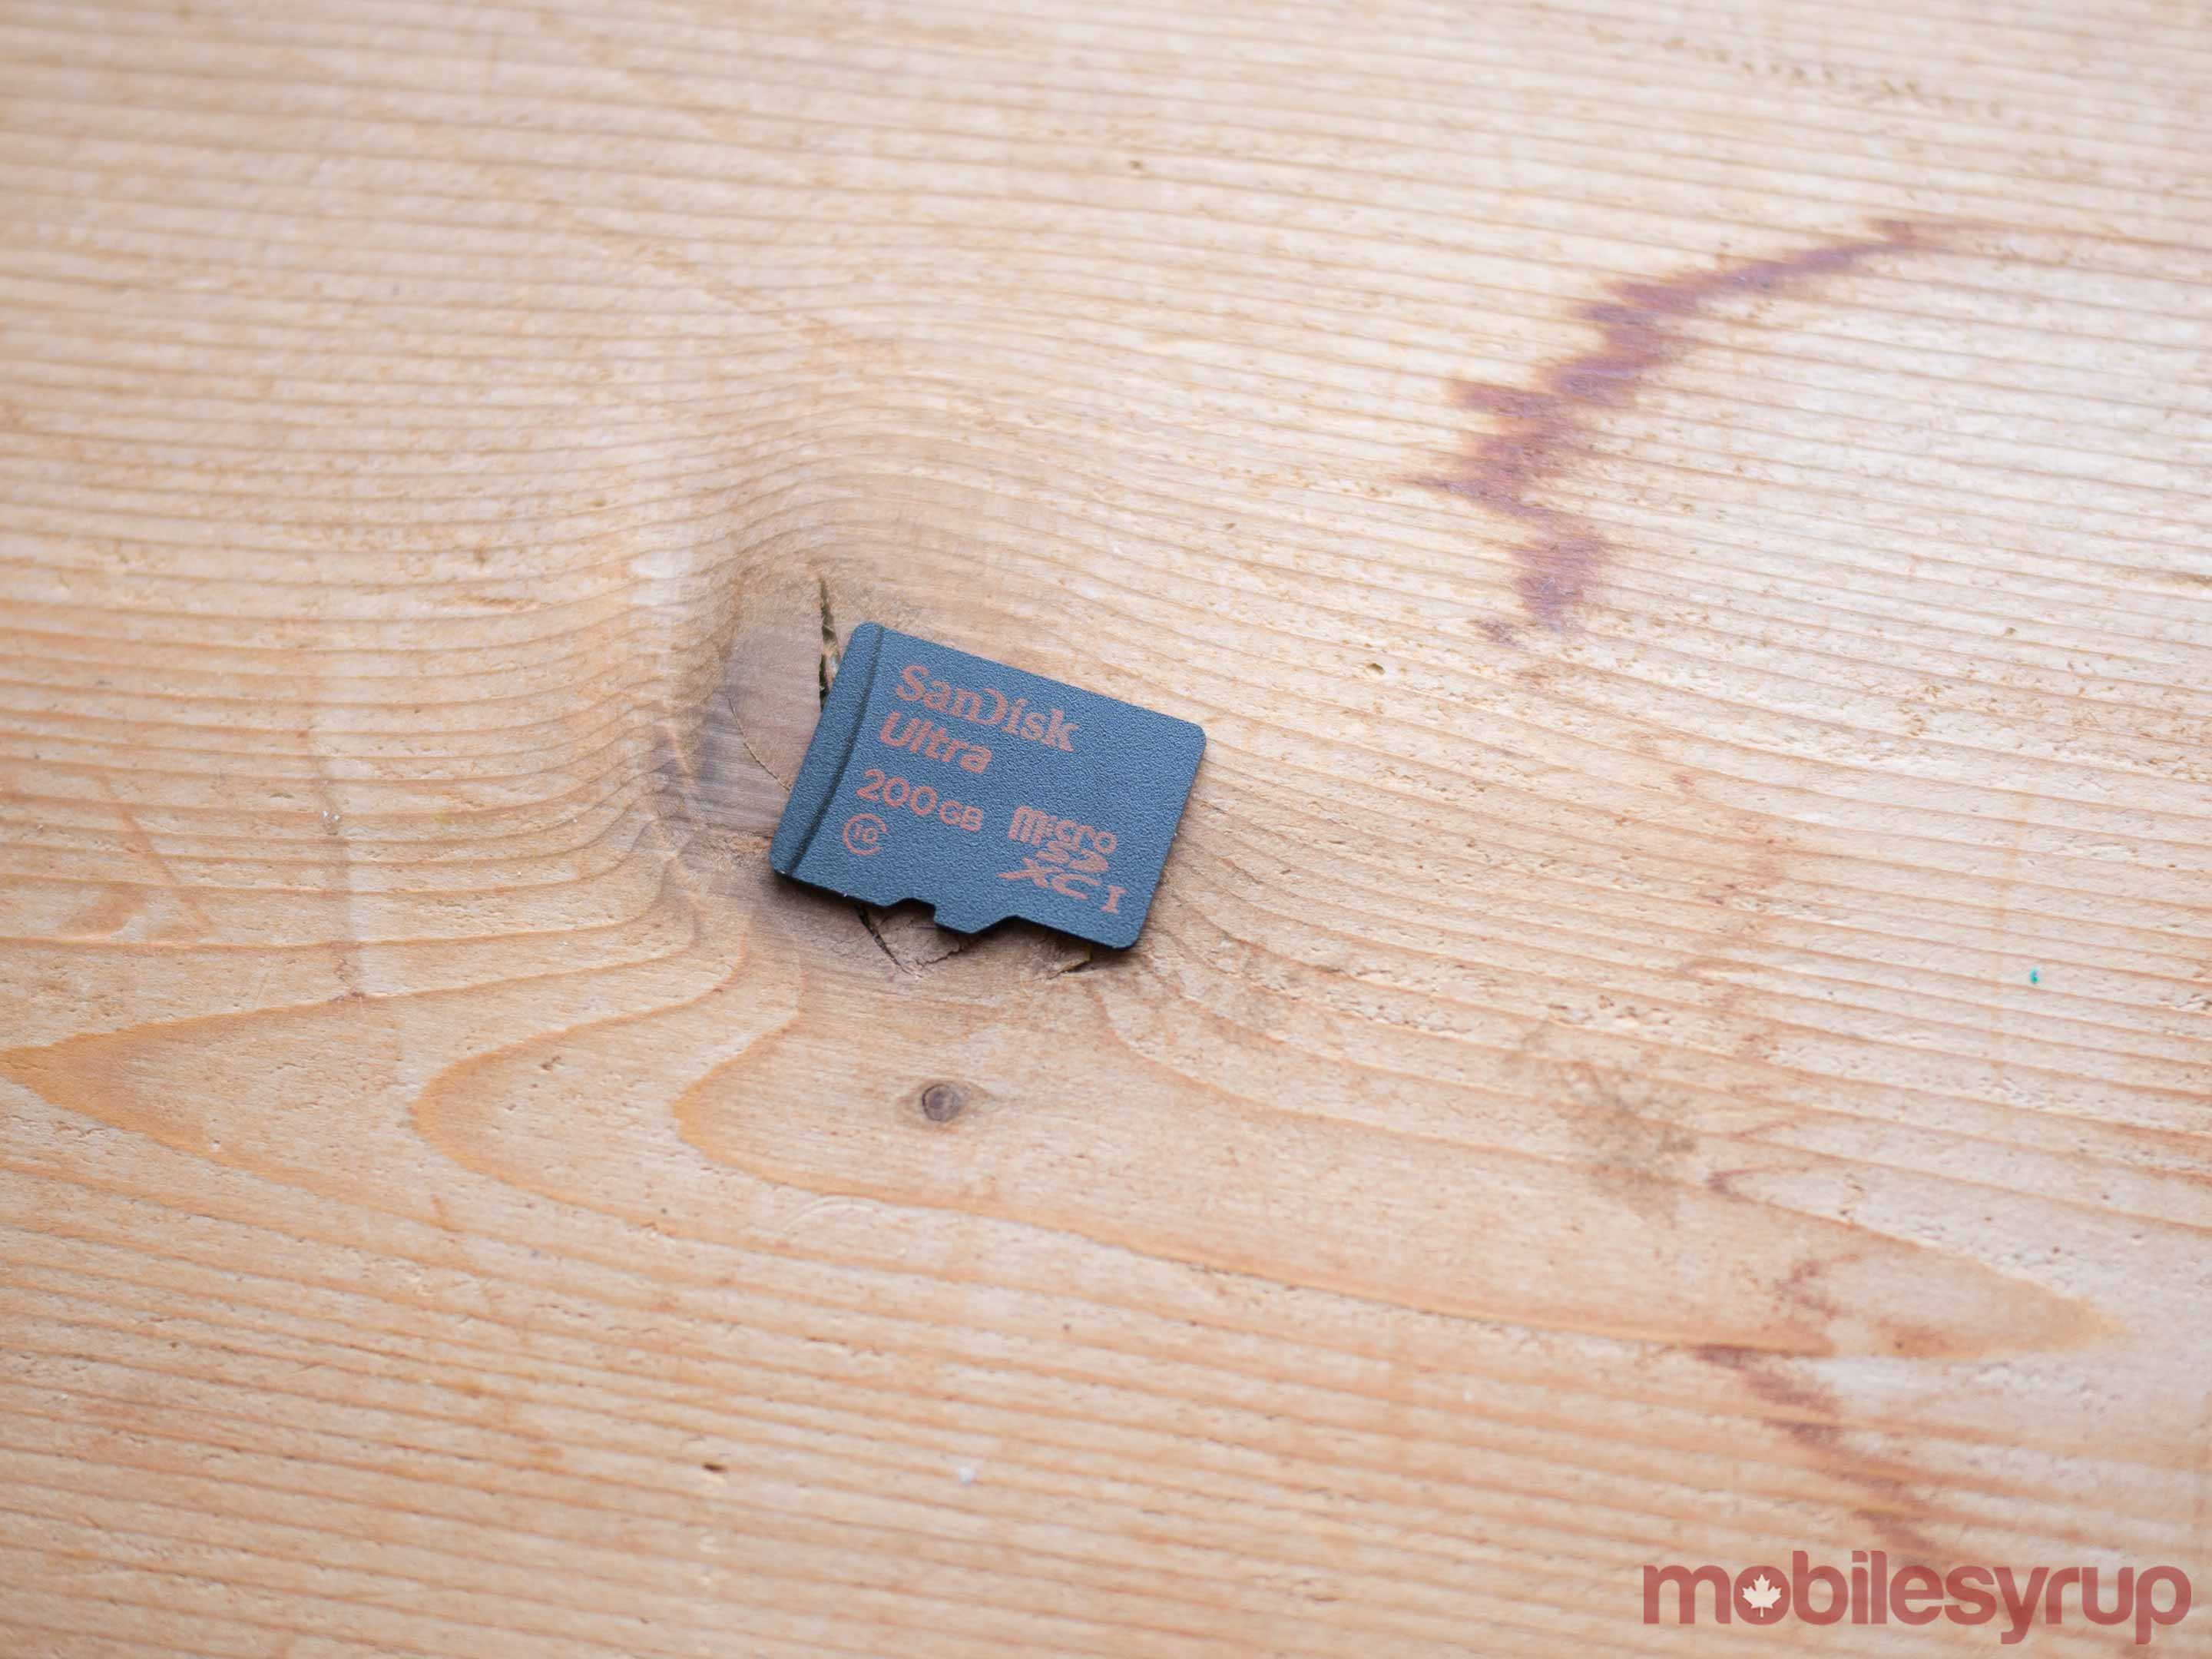 200GB Sandisk microSD card